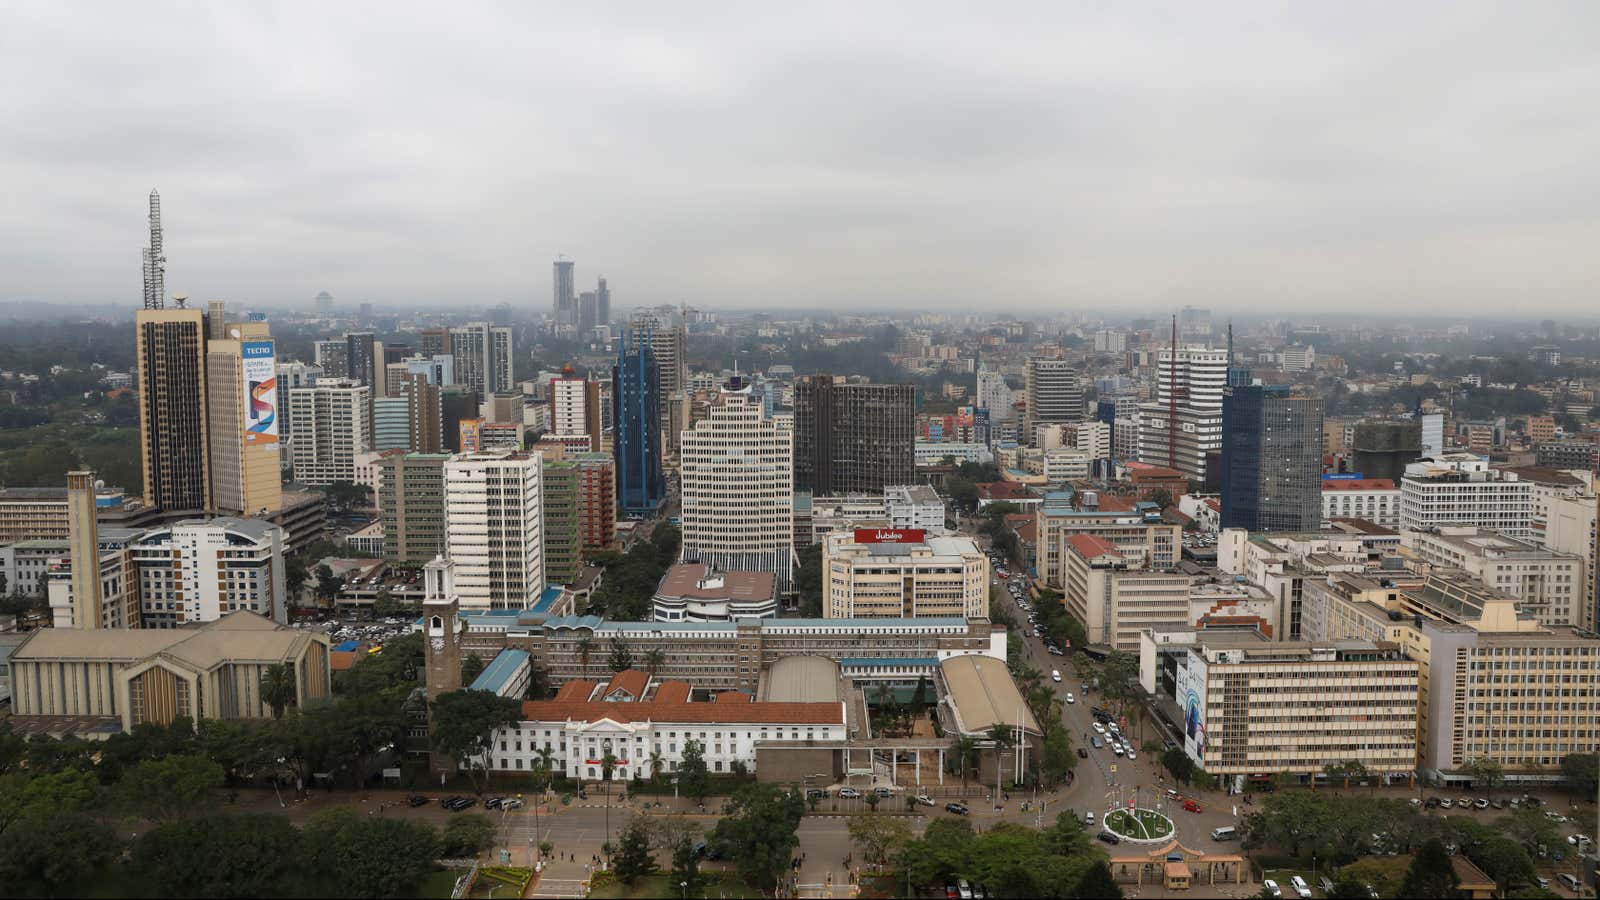 Nairobi’s central business district (CBD)